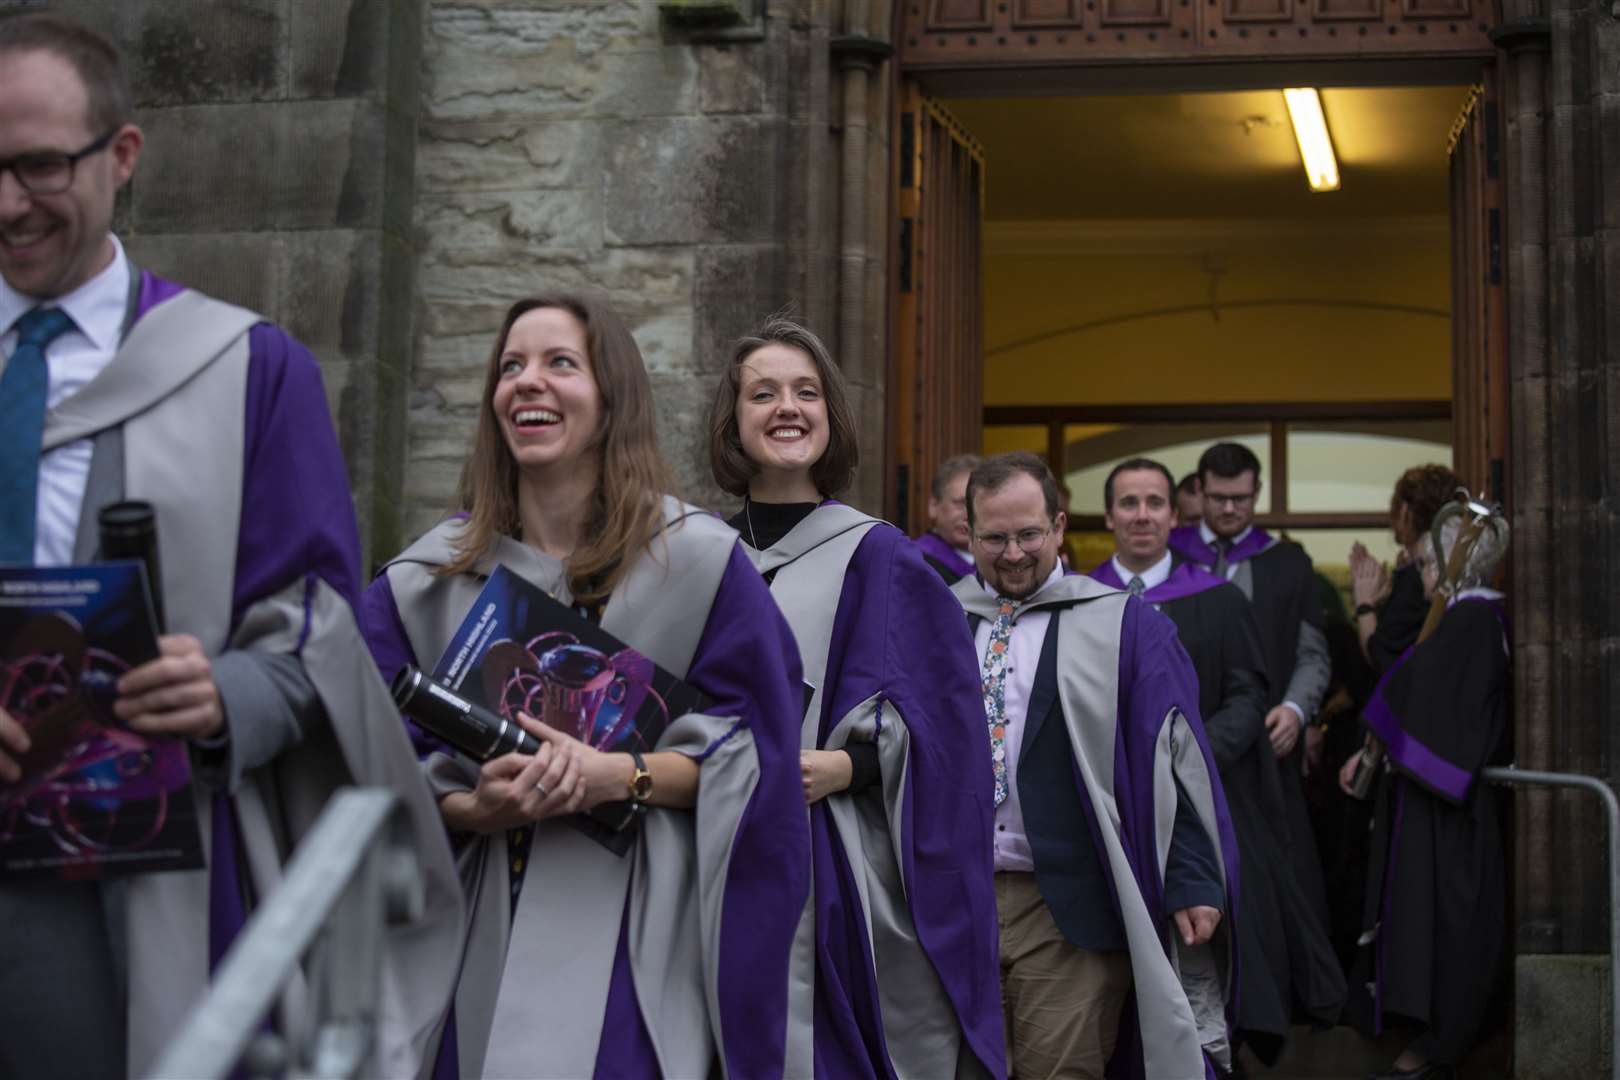 Graduates leaving the church.